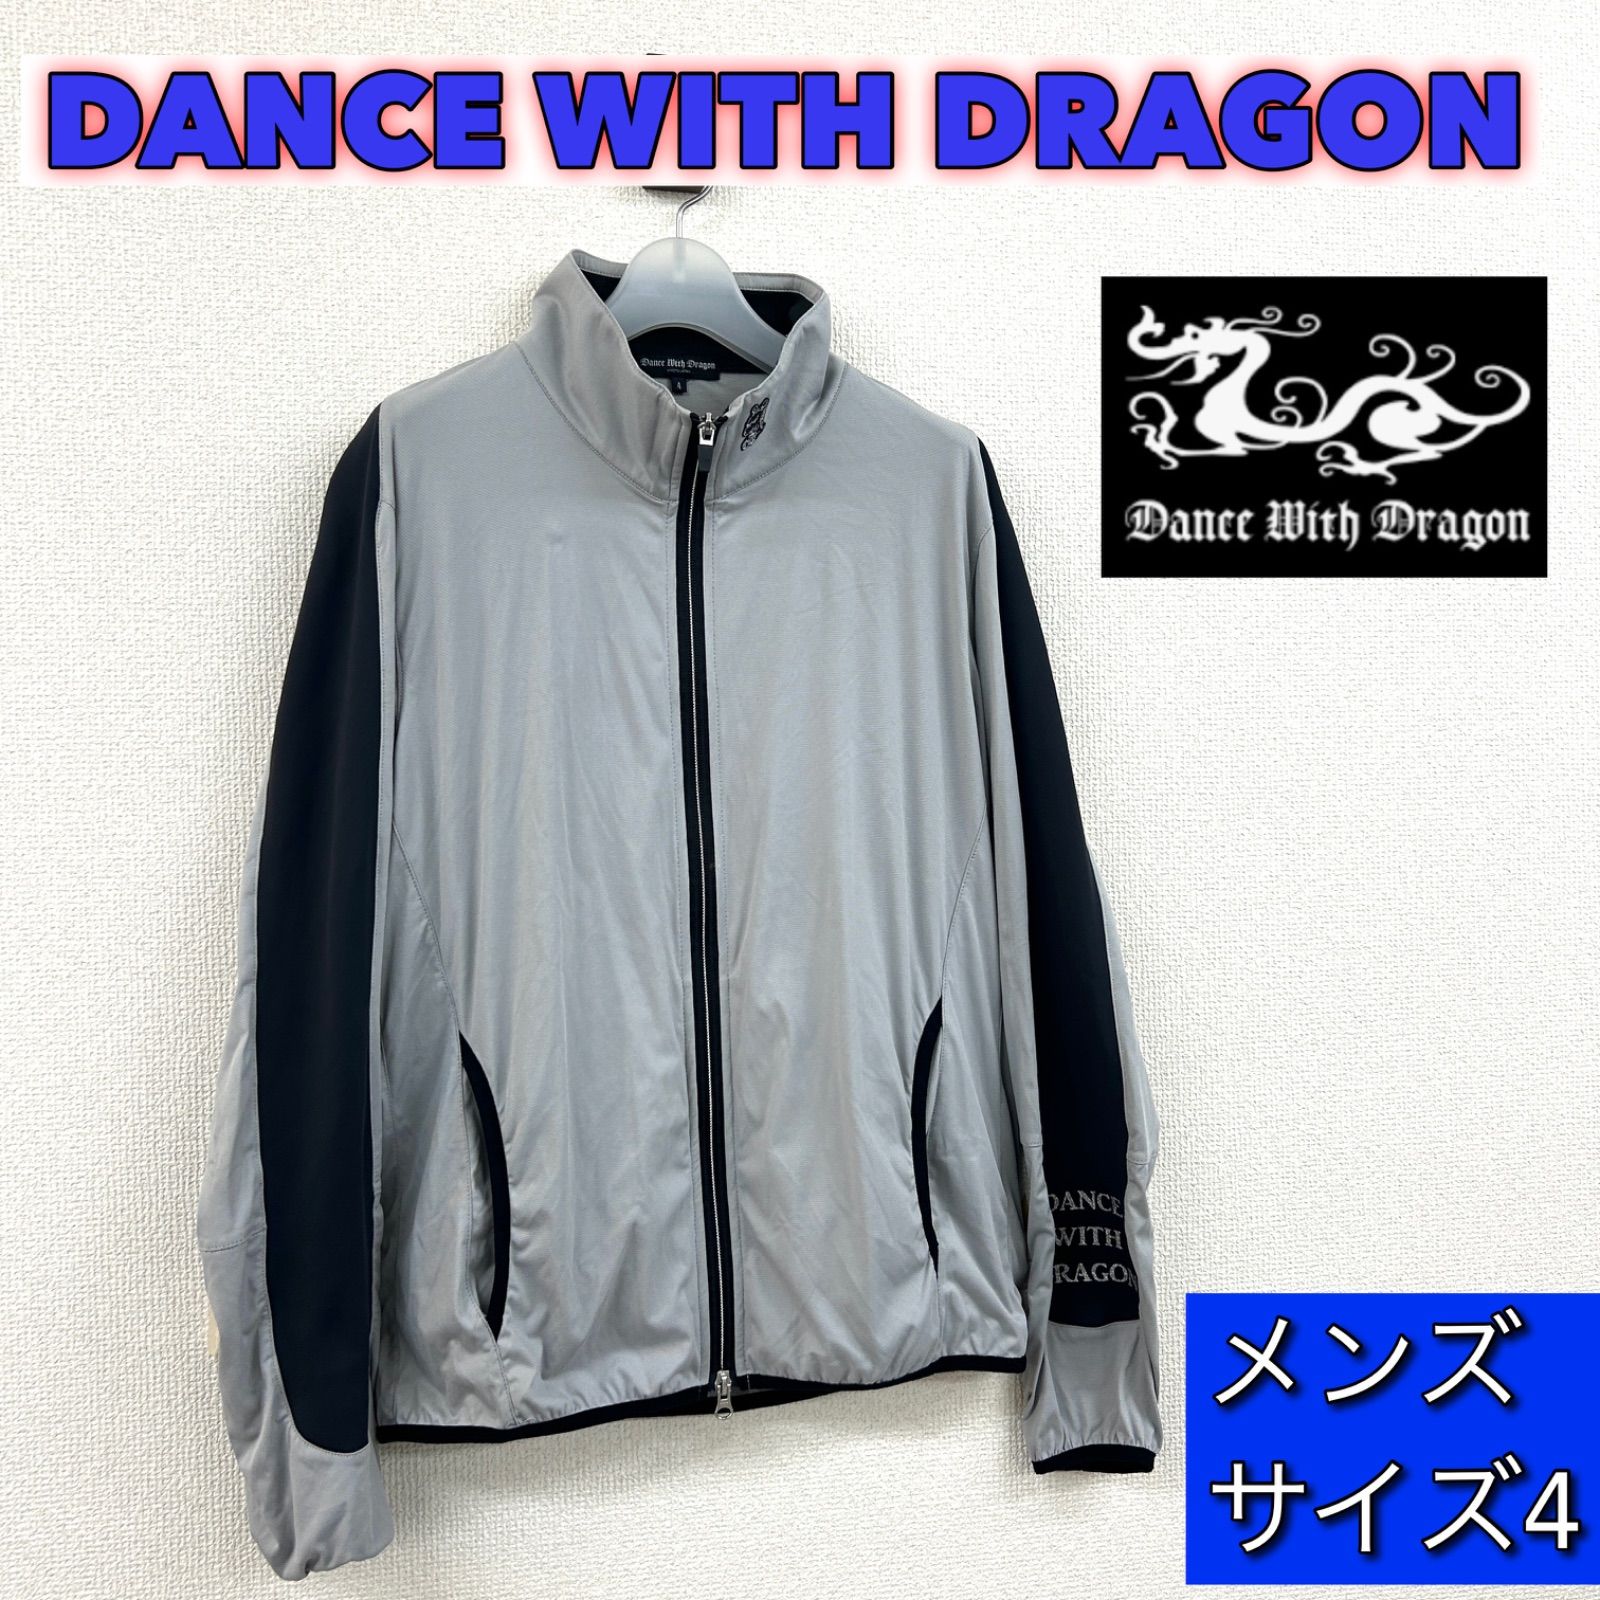 DanceWithDragon ダンスウィズドラゴン ゴルフウェア - メンズウェア